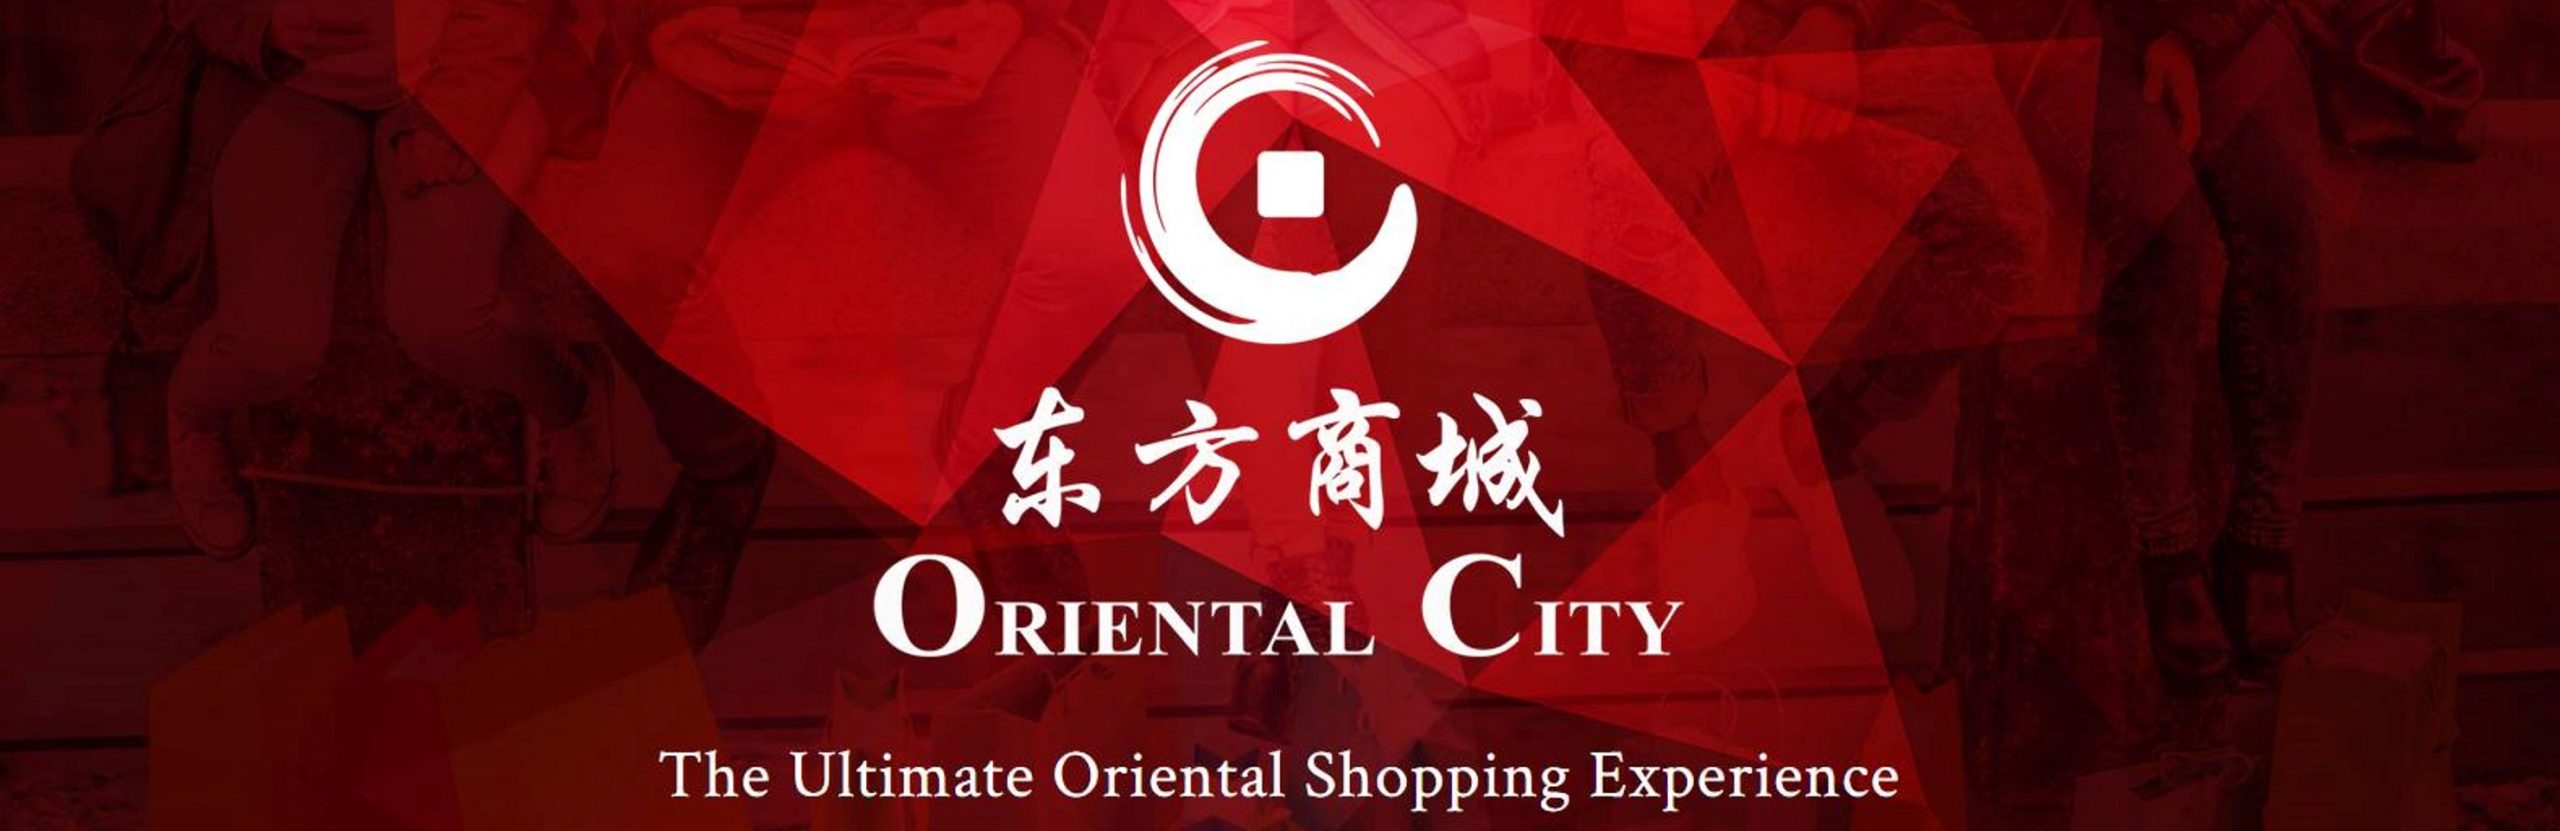 Website Oriental City The